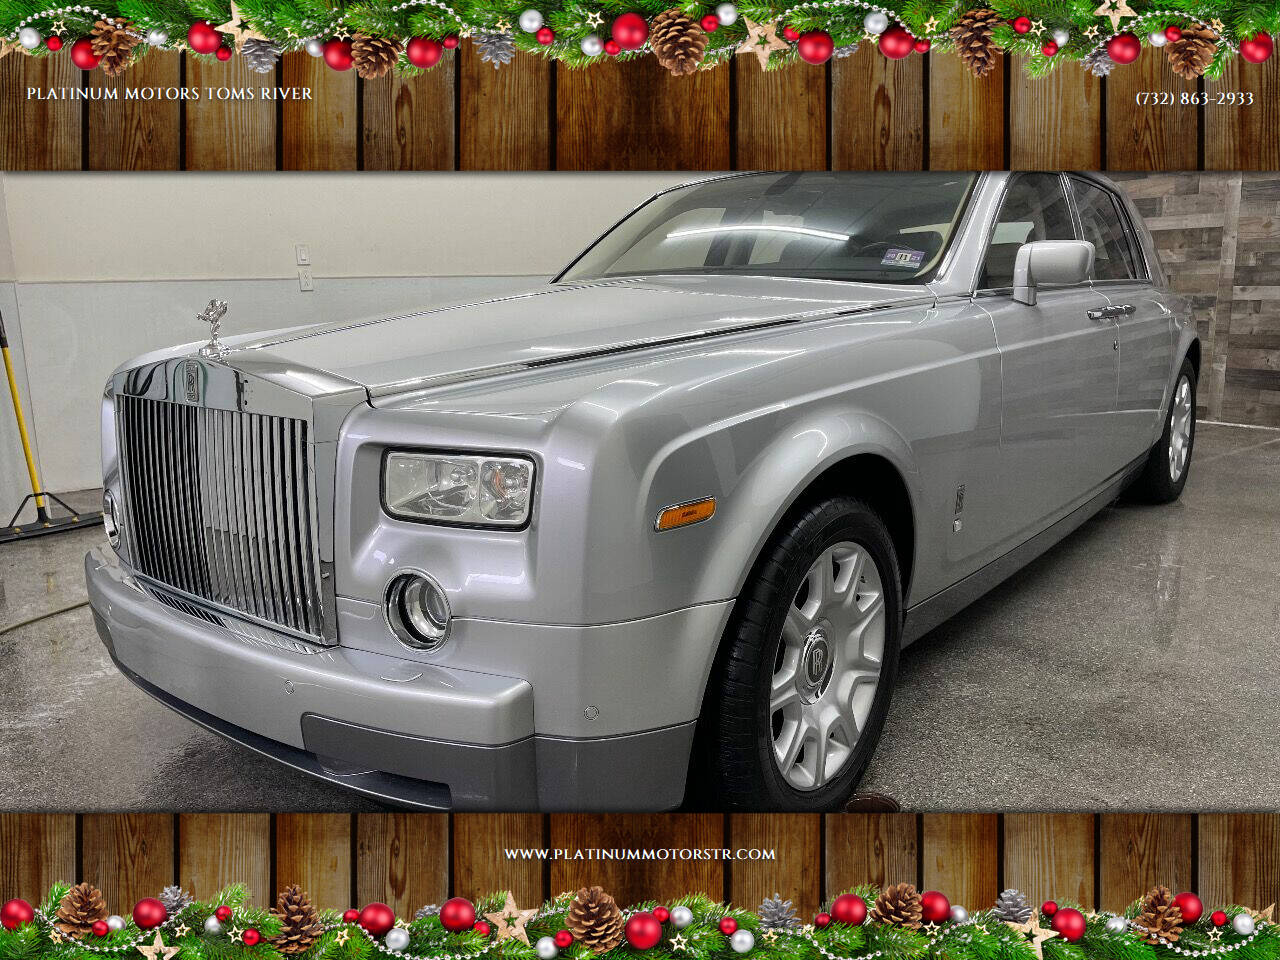 New & Used Rolls-Royce Phantom for Sale near Me